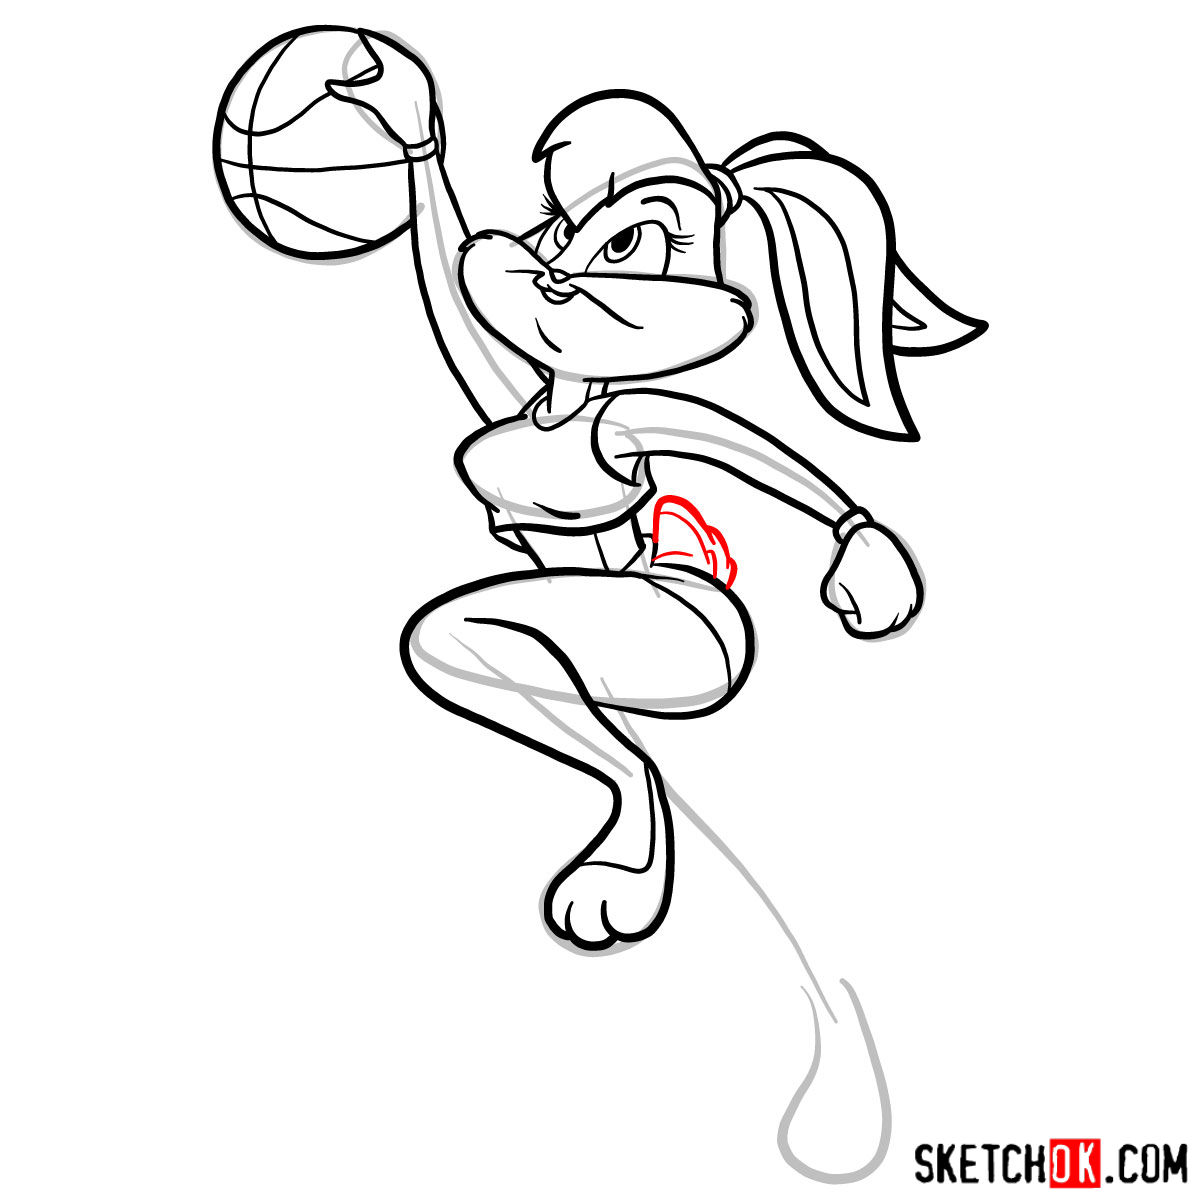 How to draw Lola Bunny playing basketball - step 11